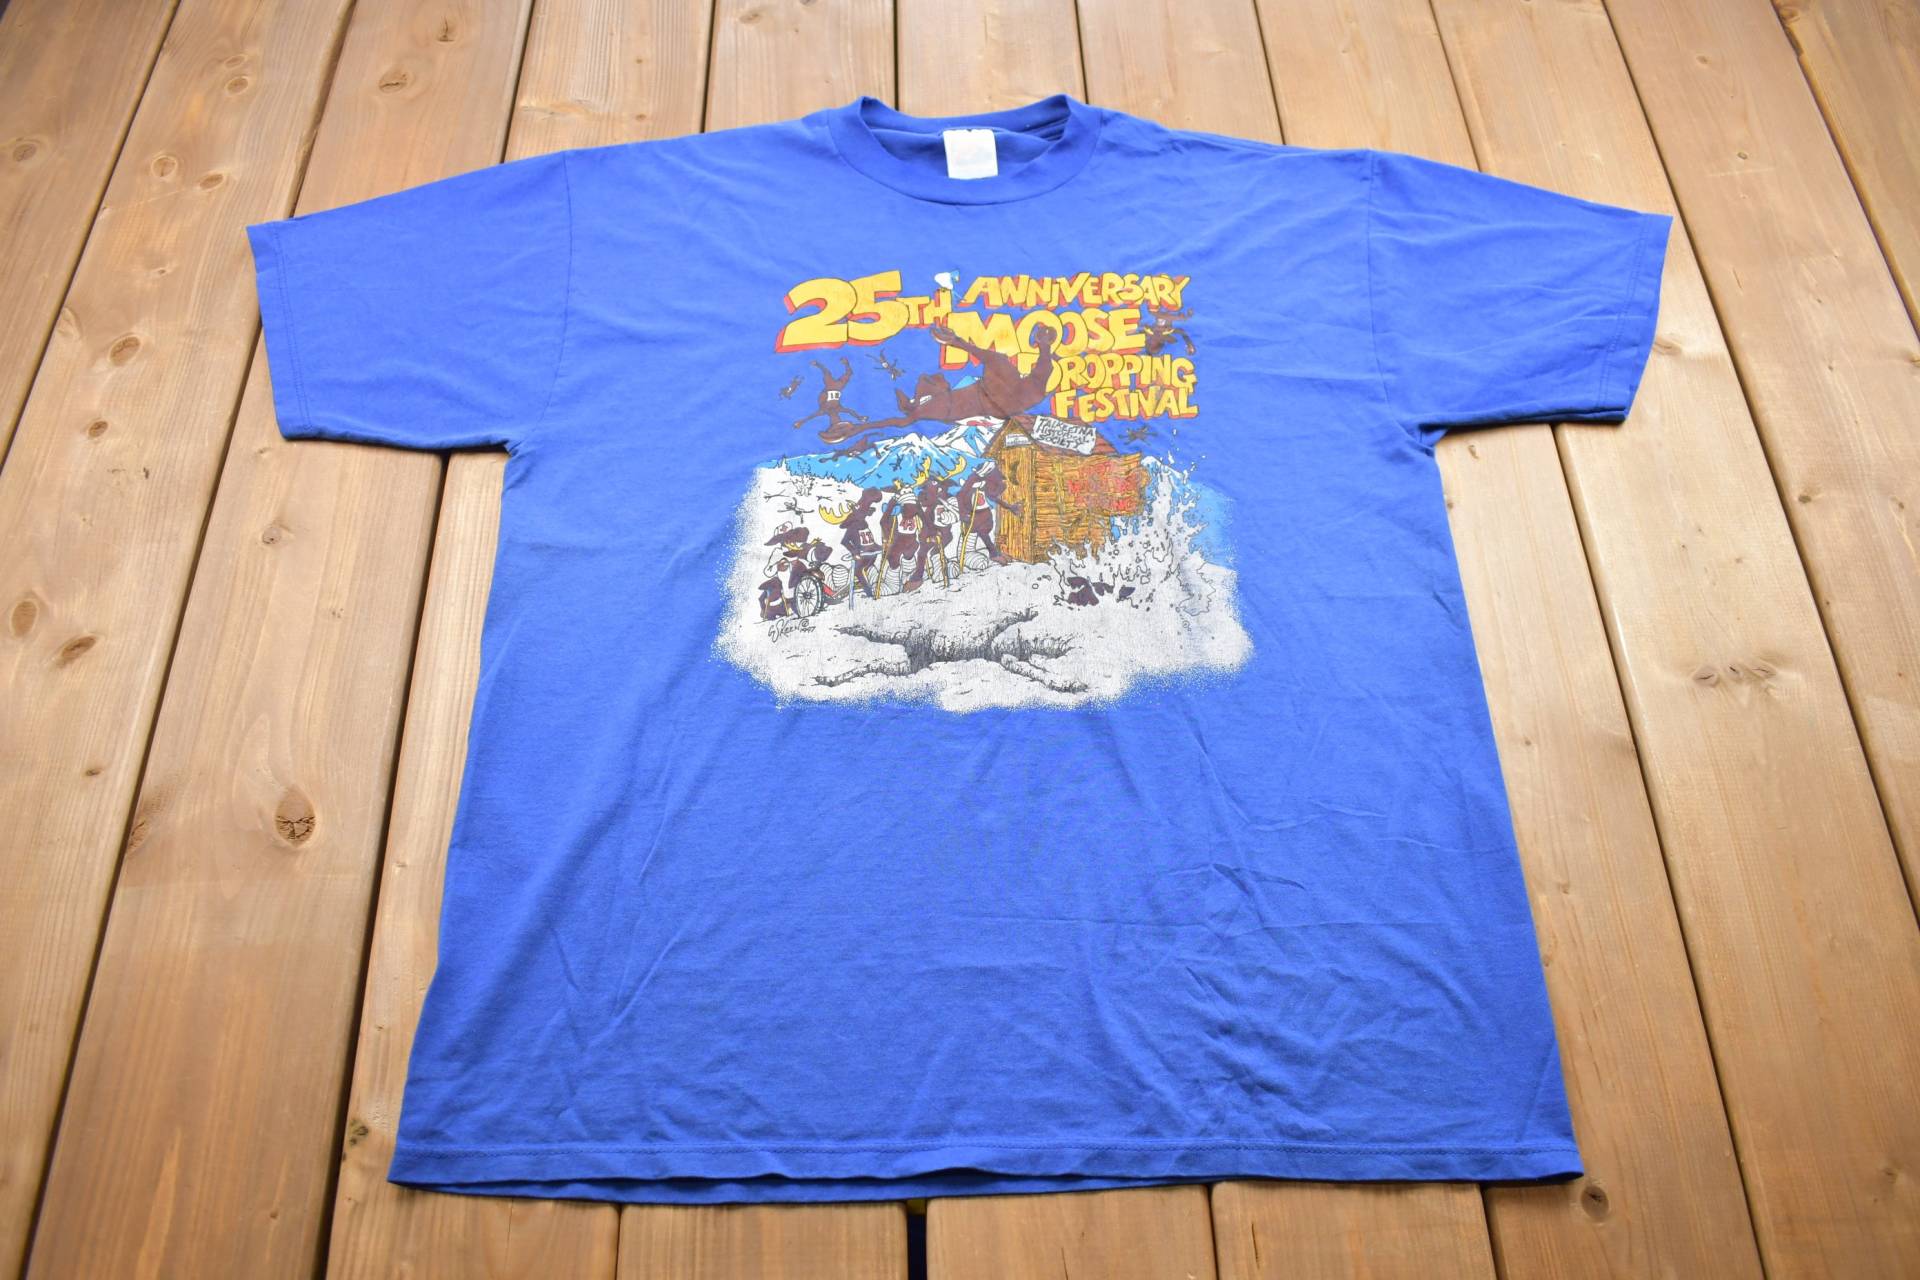 Vintage 1997 Elch Dropping Festival Graphic T Shirt/streetwear Selten Made in Usa von Lostboysvintage